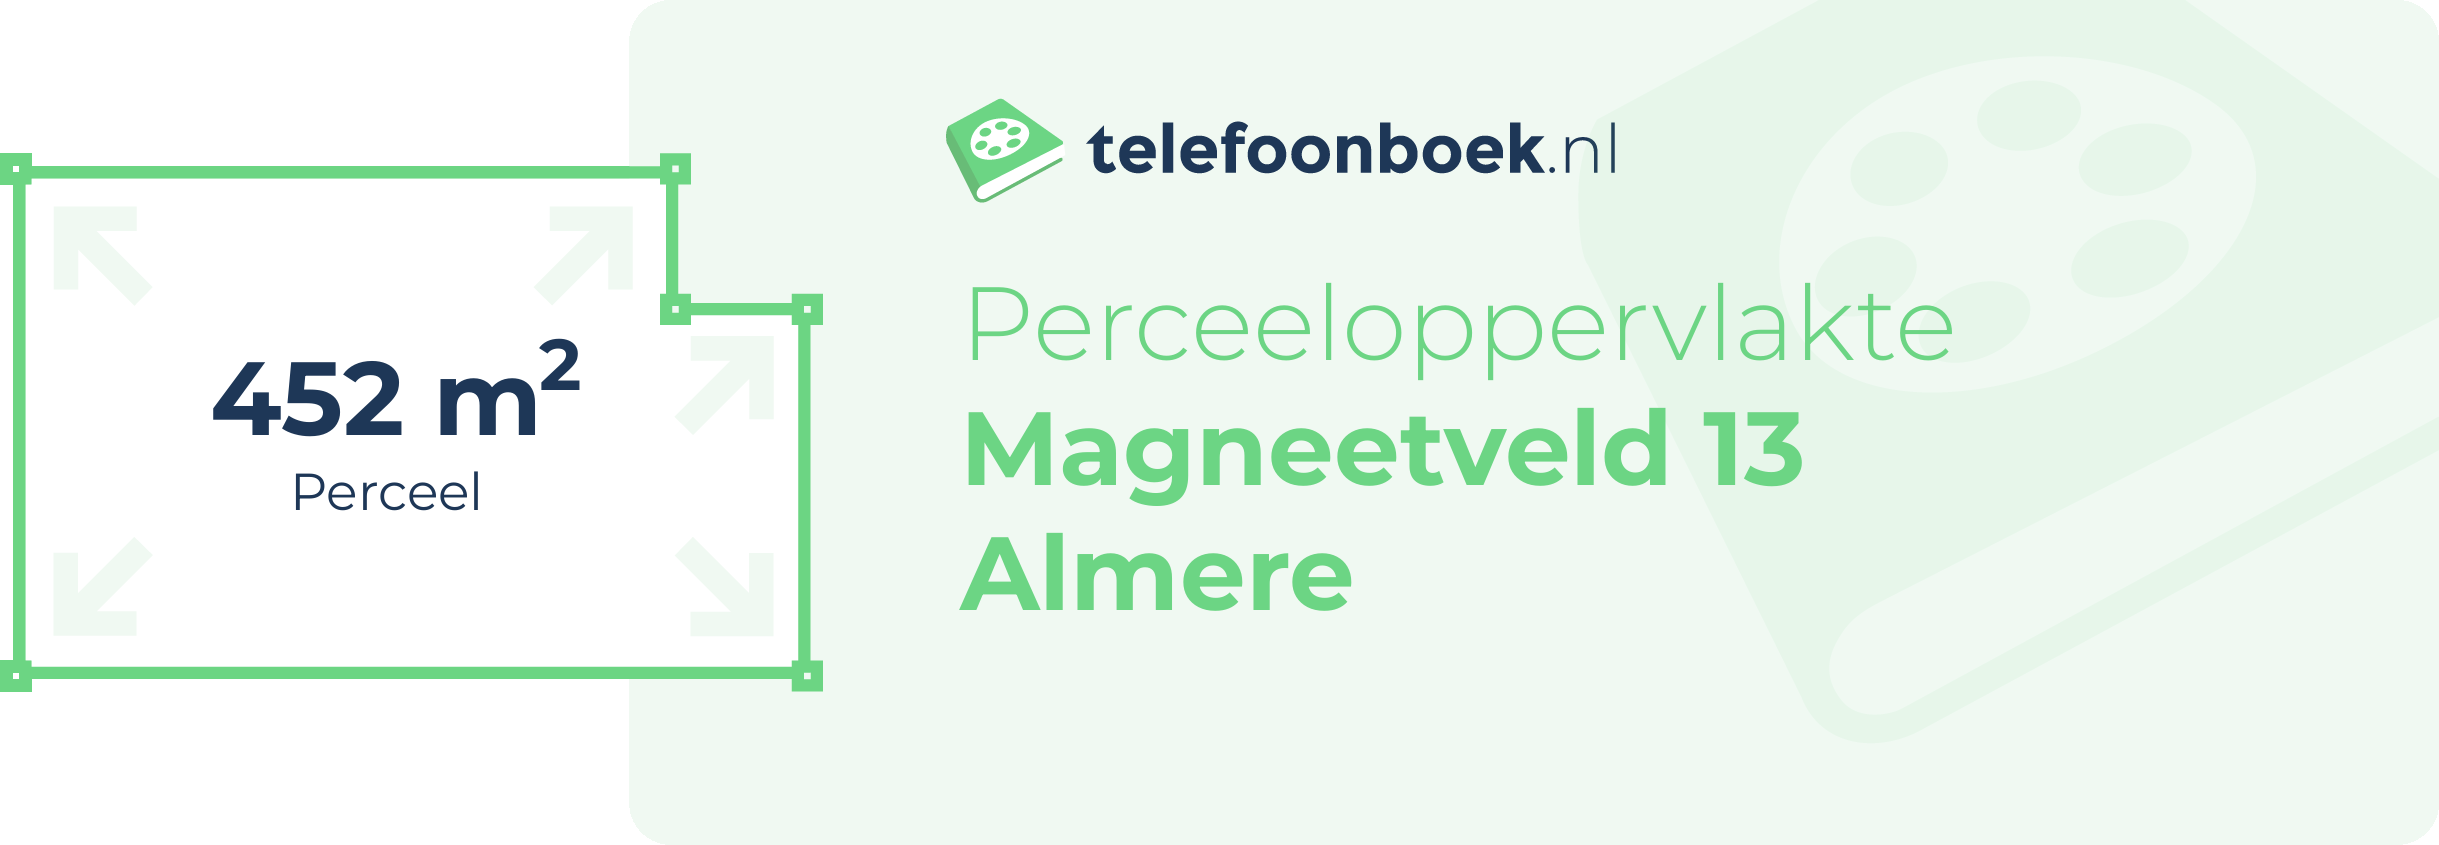 Perceeloppervlakte Magneetveld 13 Almere